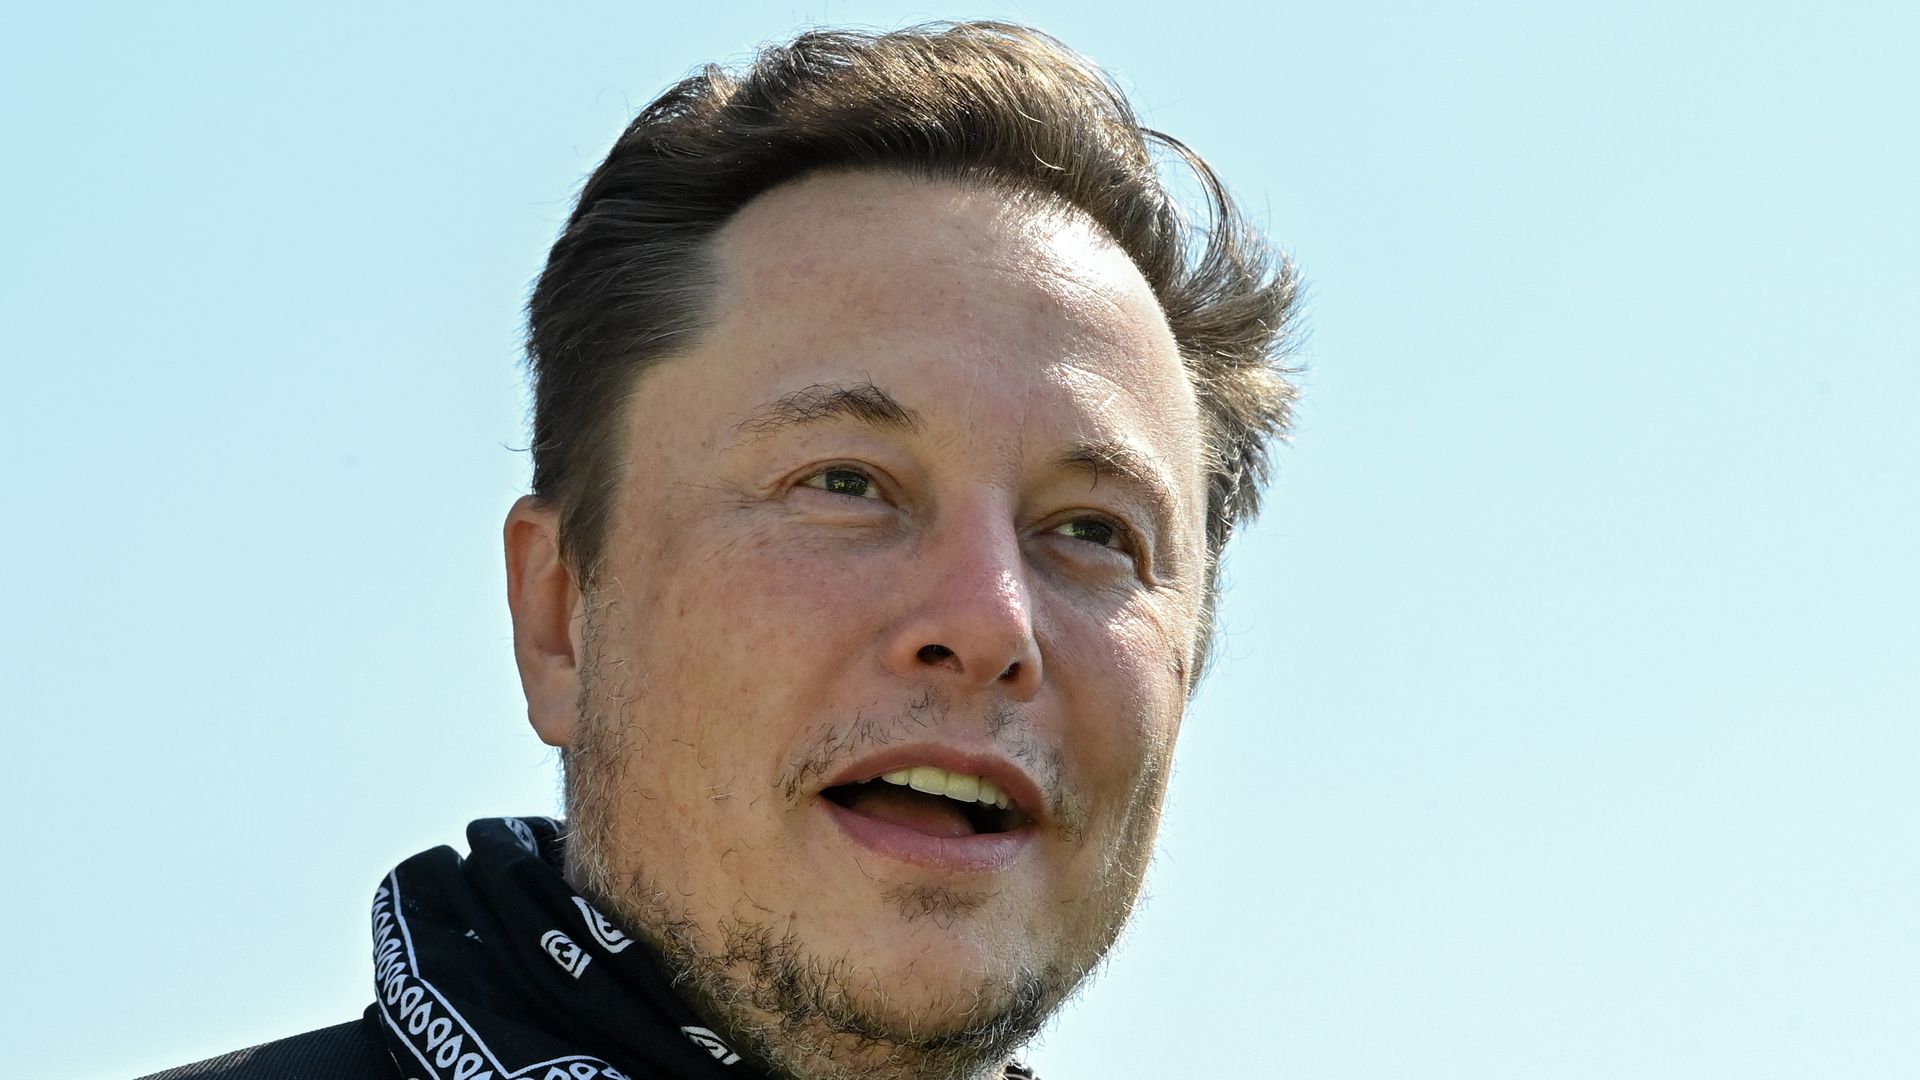 On 13 August 2021, Brandenburg, Grünheide, Elon Musk, Tesla CEO, stands at a press event on the grounds of the Tesla Gigafactory. 